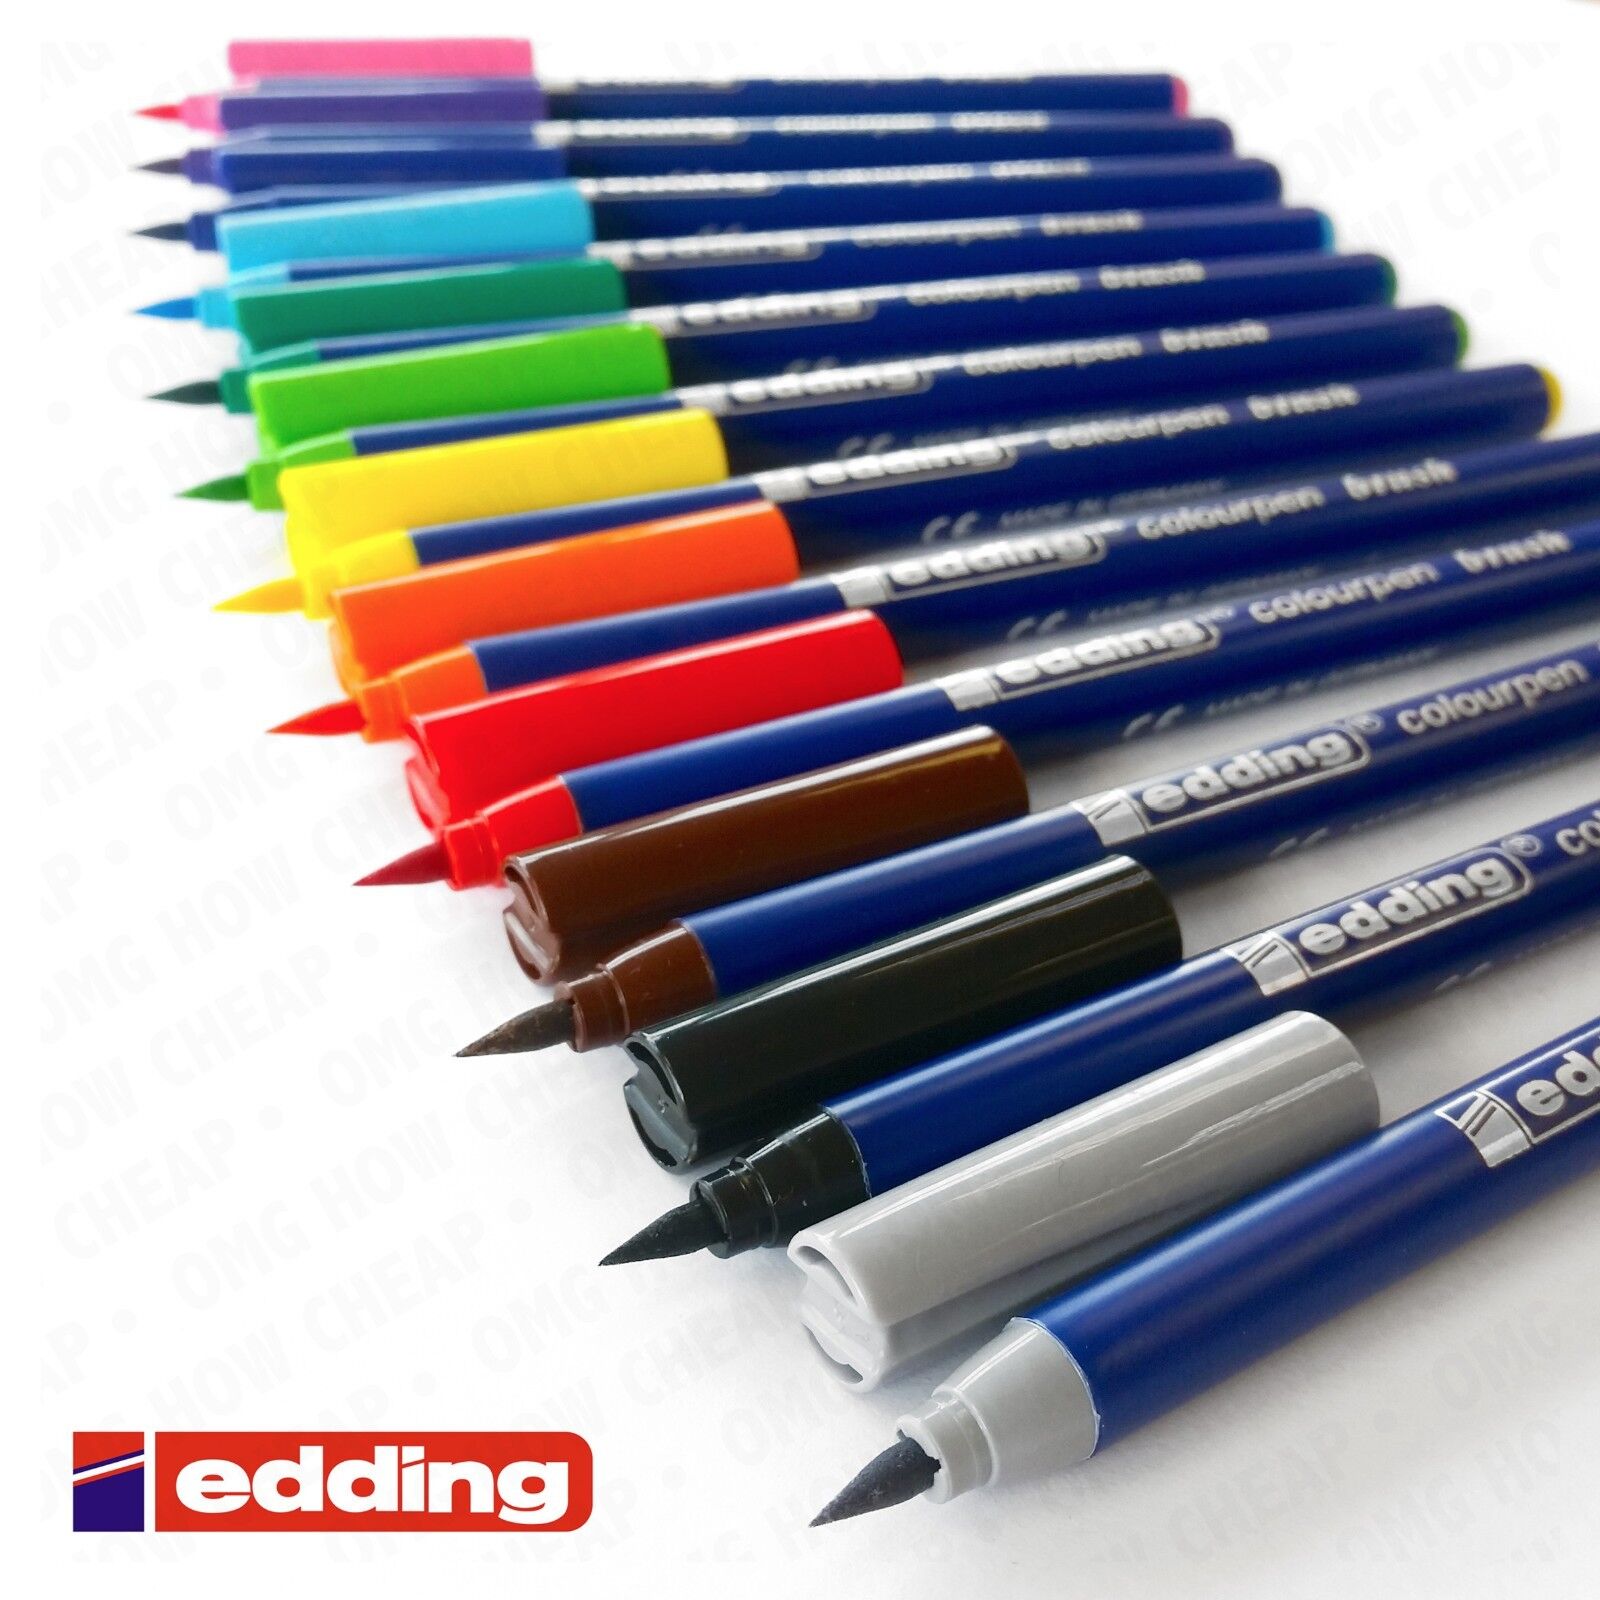 Edding - Colourpen - Brush Tipped brush Pen - Wallet of 12 Colouring Markers